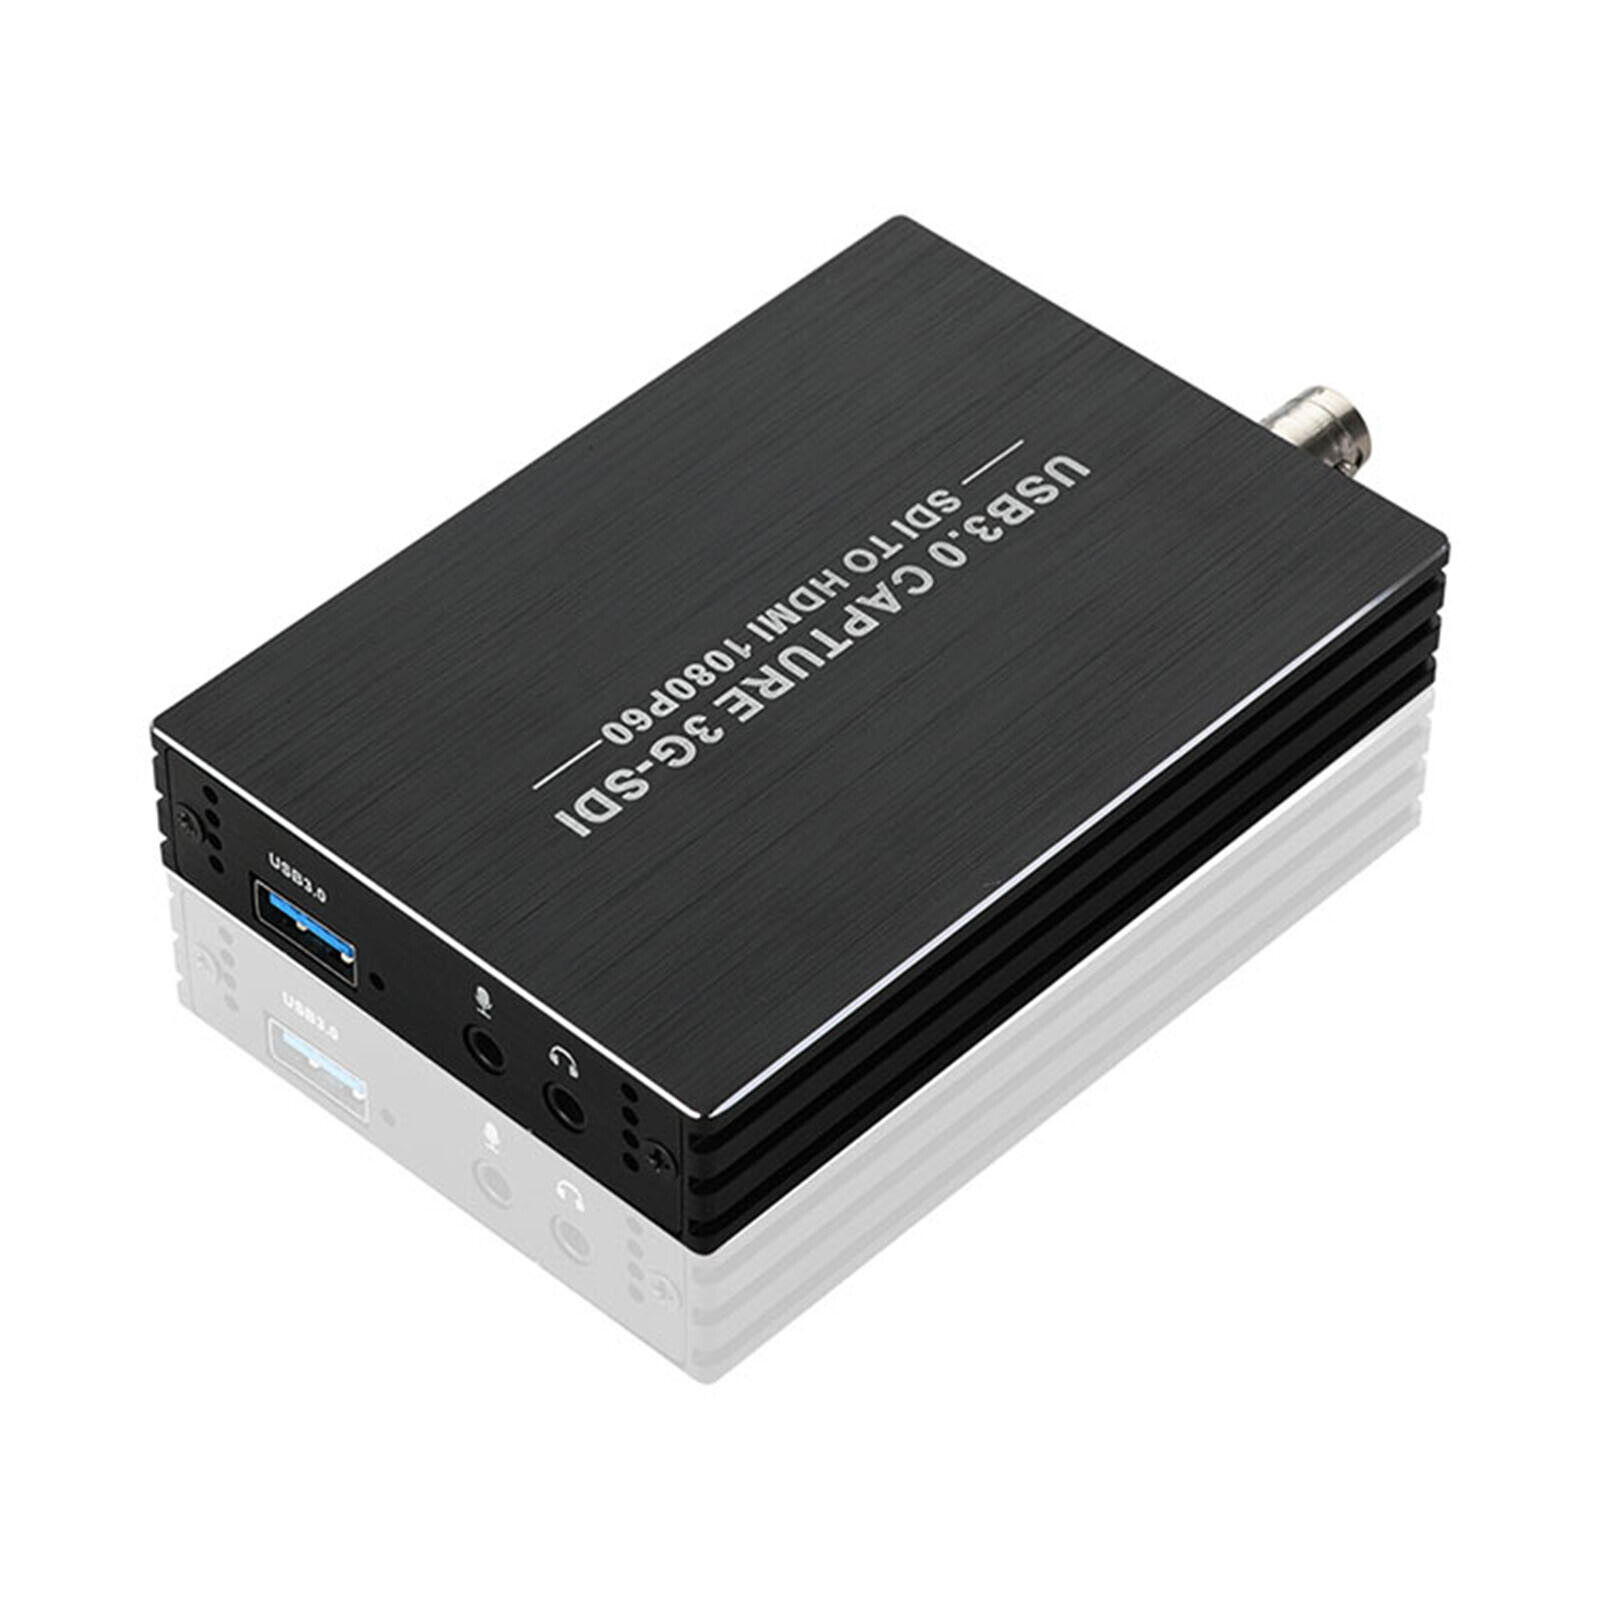 SDI to HDMI+USB3.0 Video Capture Card